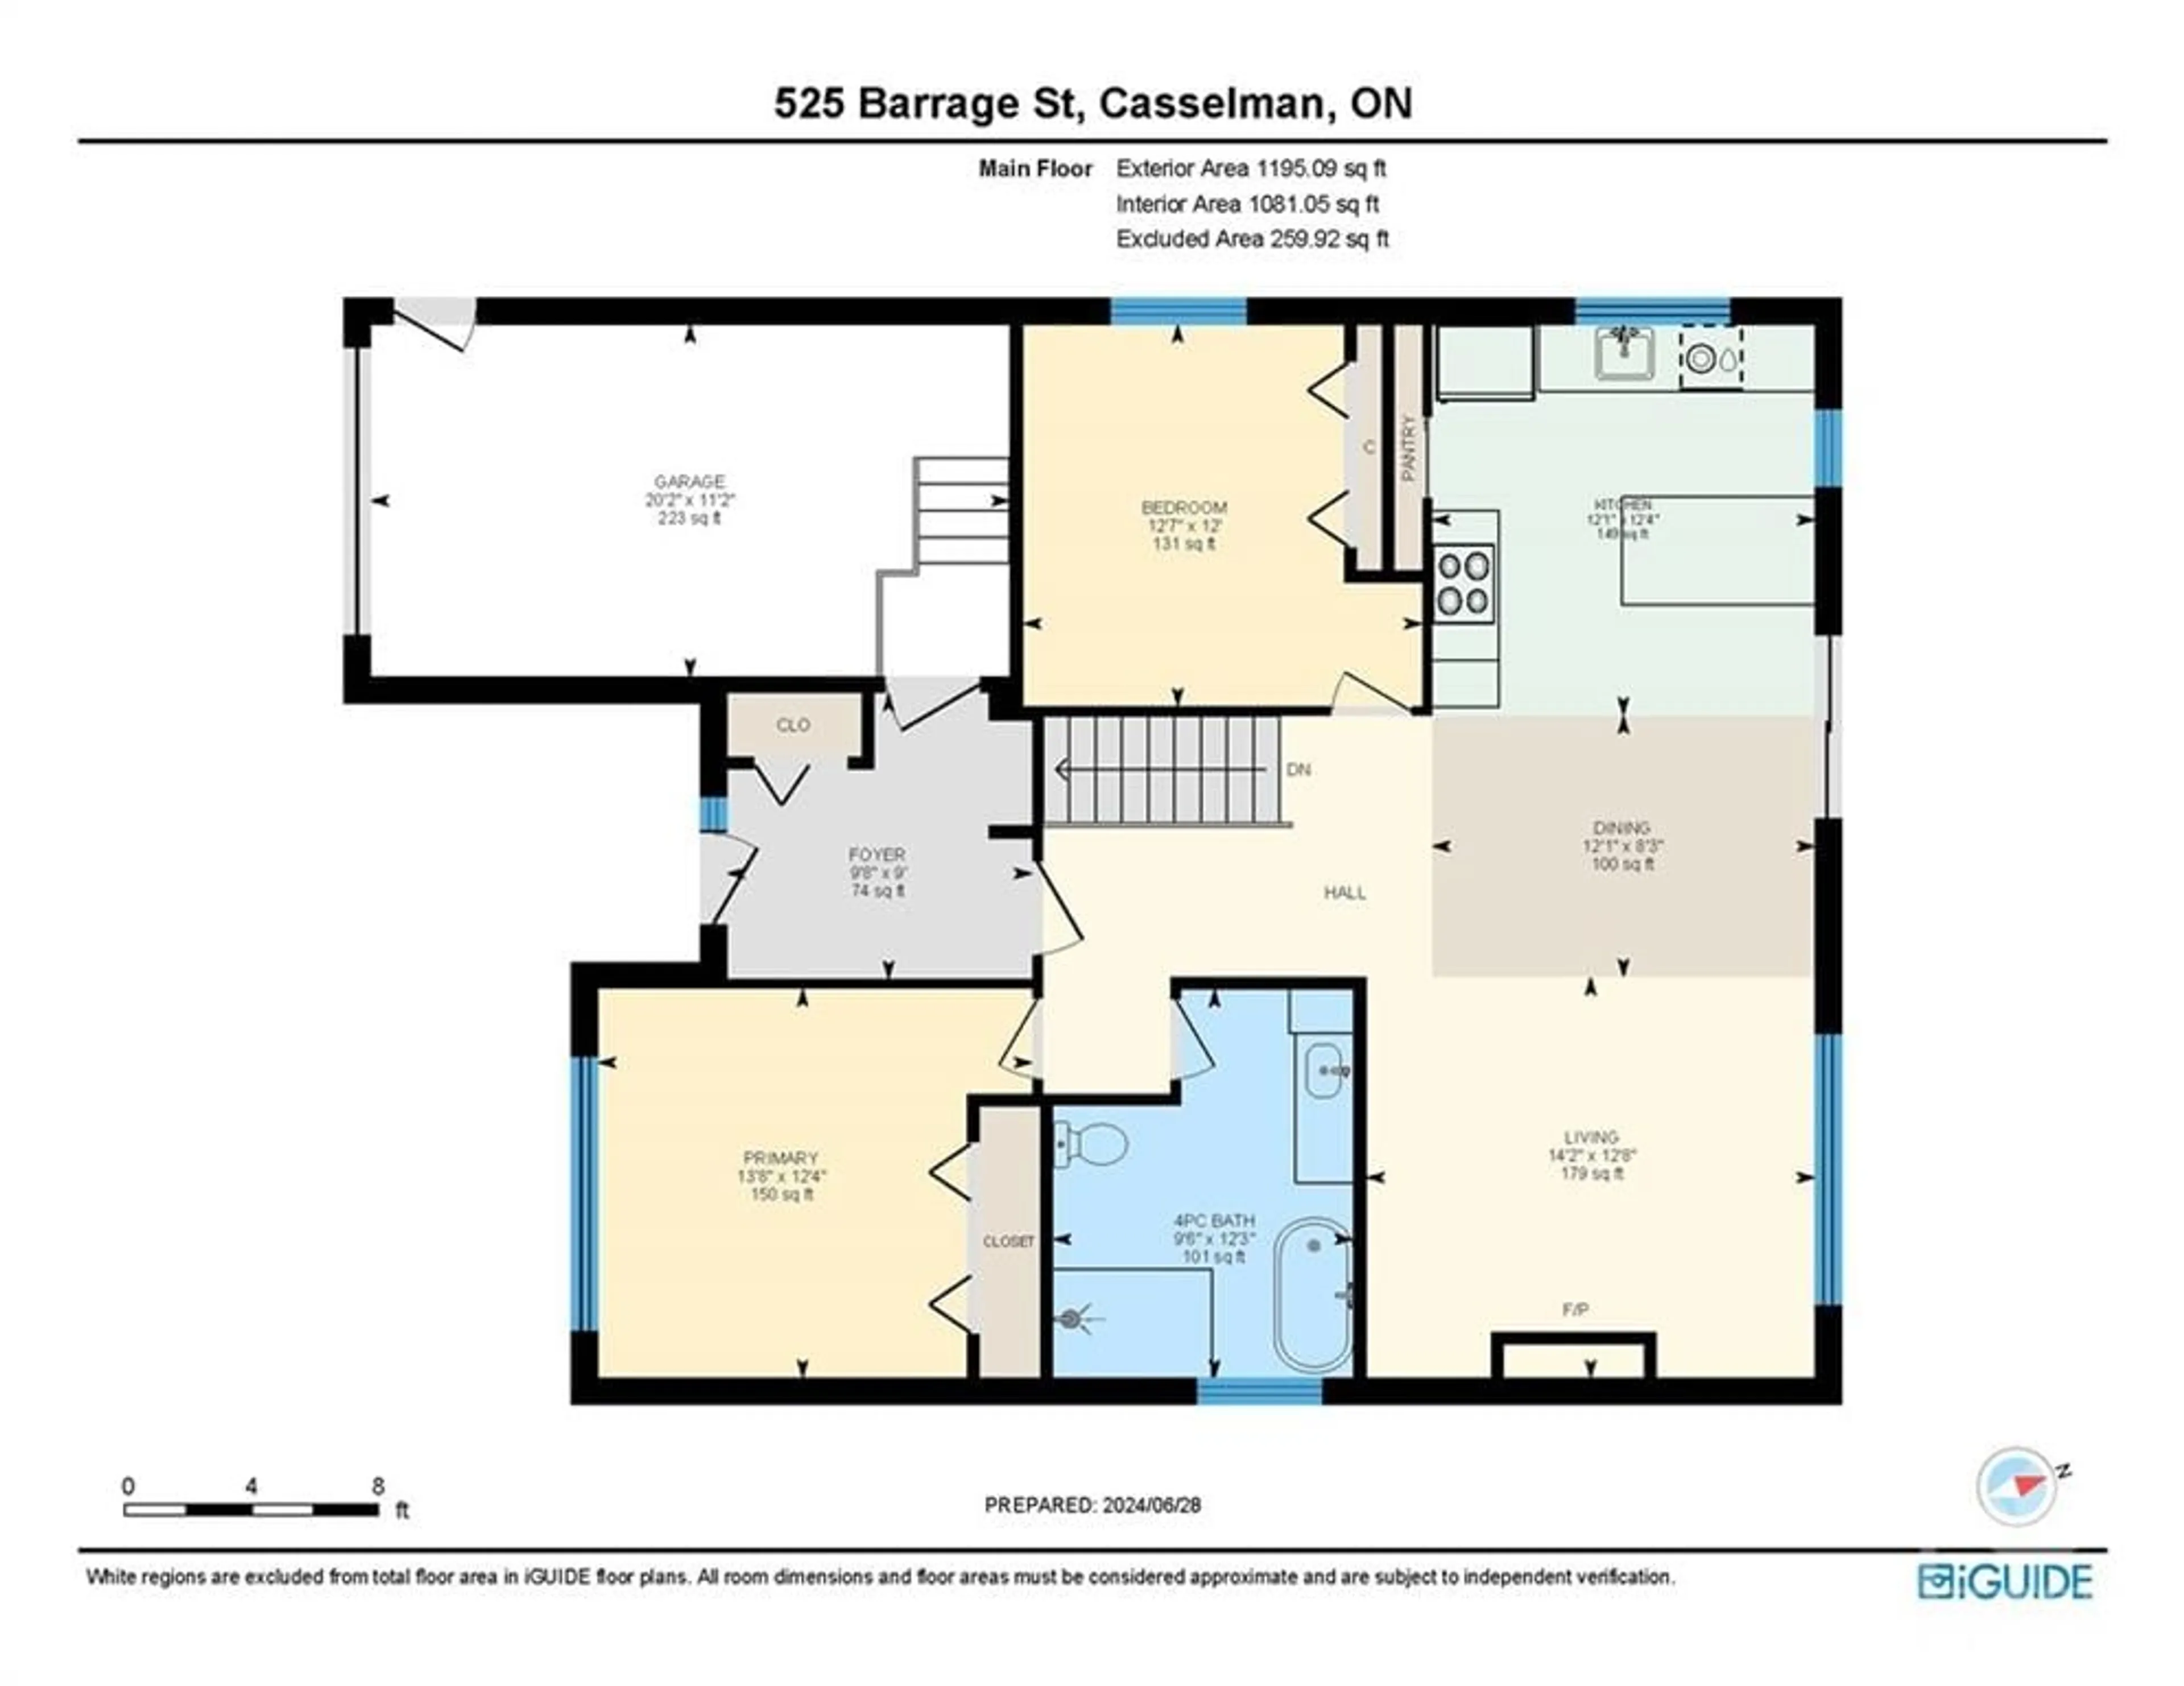 Floor plan for 525 BARRAGE St, Casselman Ontario K0A 1M0